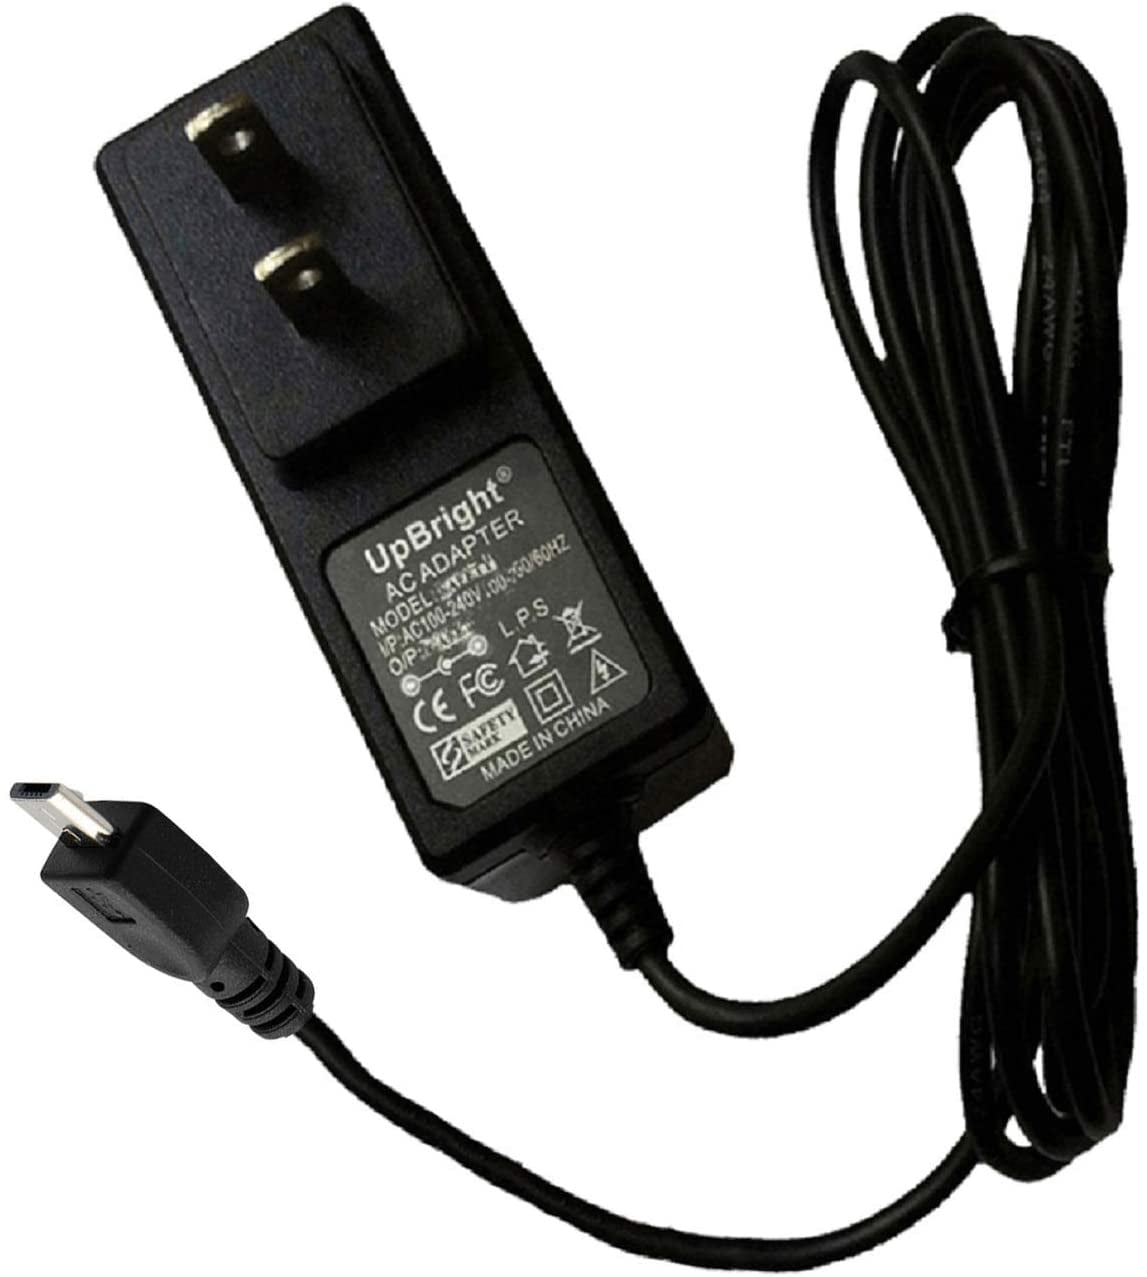 2m USB Black Cable for Motorola MBP845CONNECTPU Parent's Unit Baby Monitor 